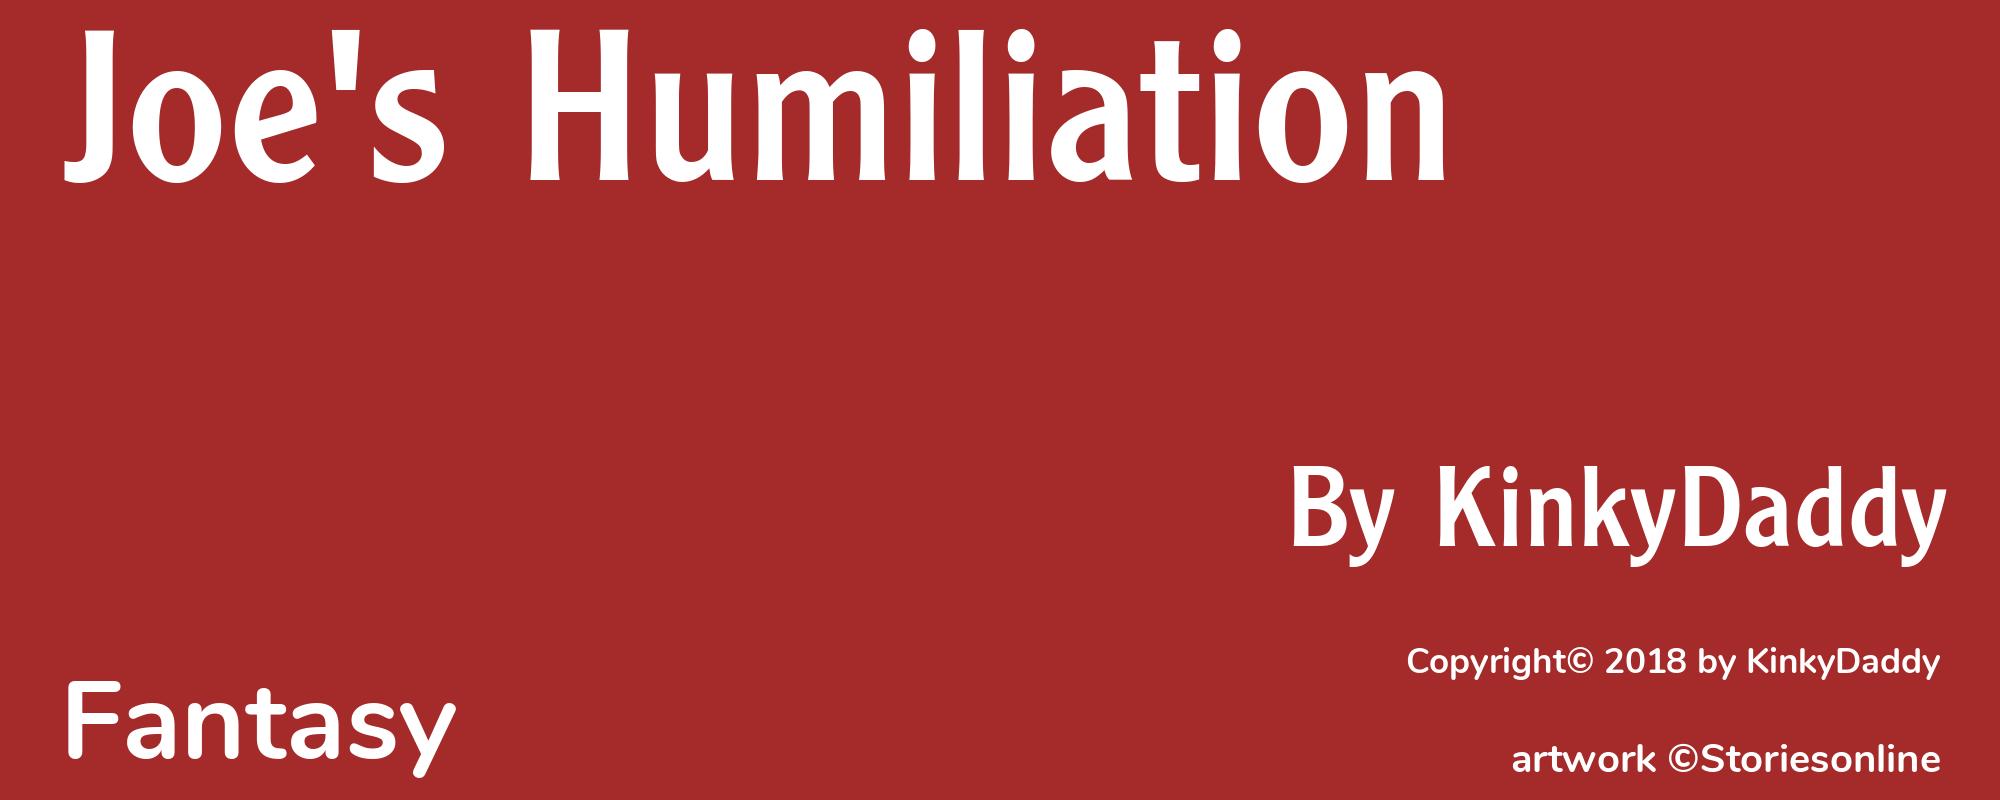 Joe's Humiliation - Cover